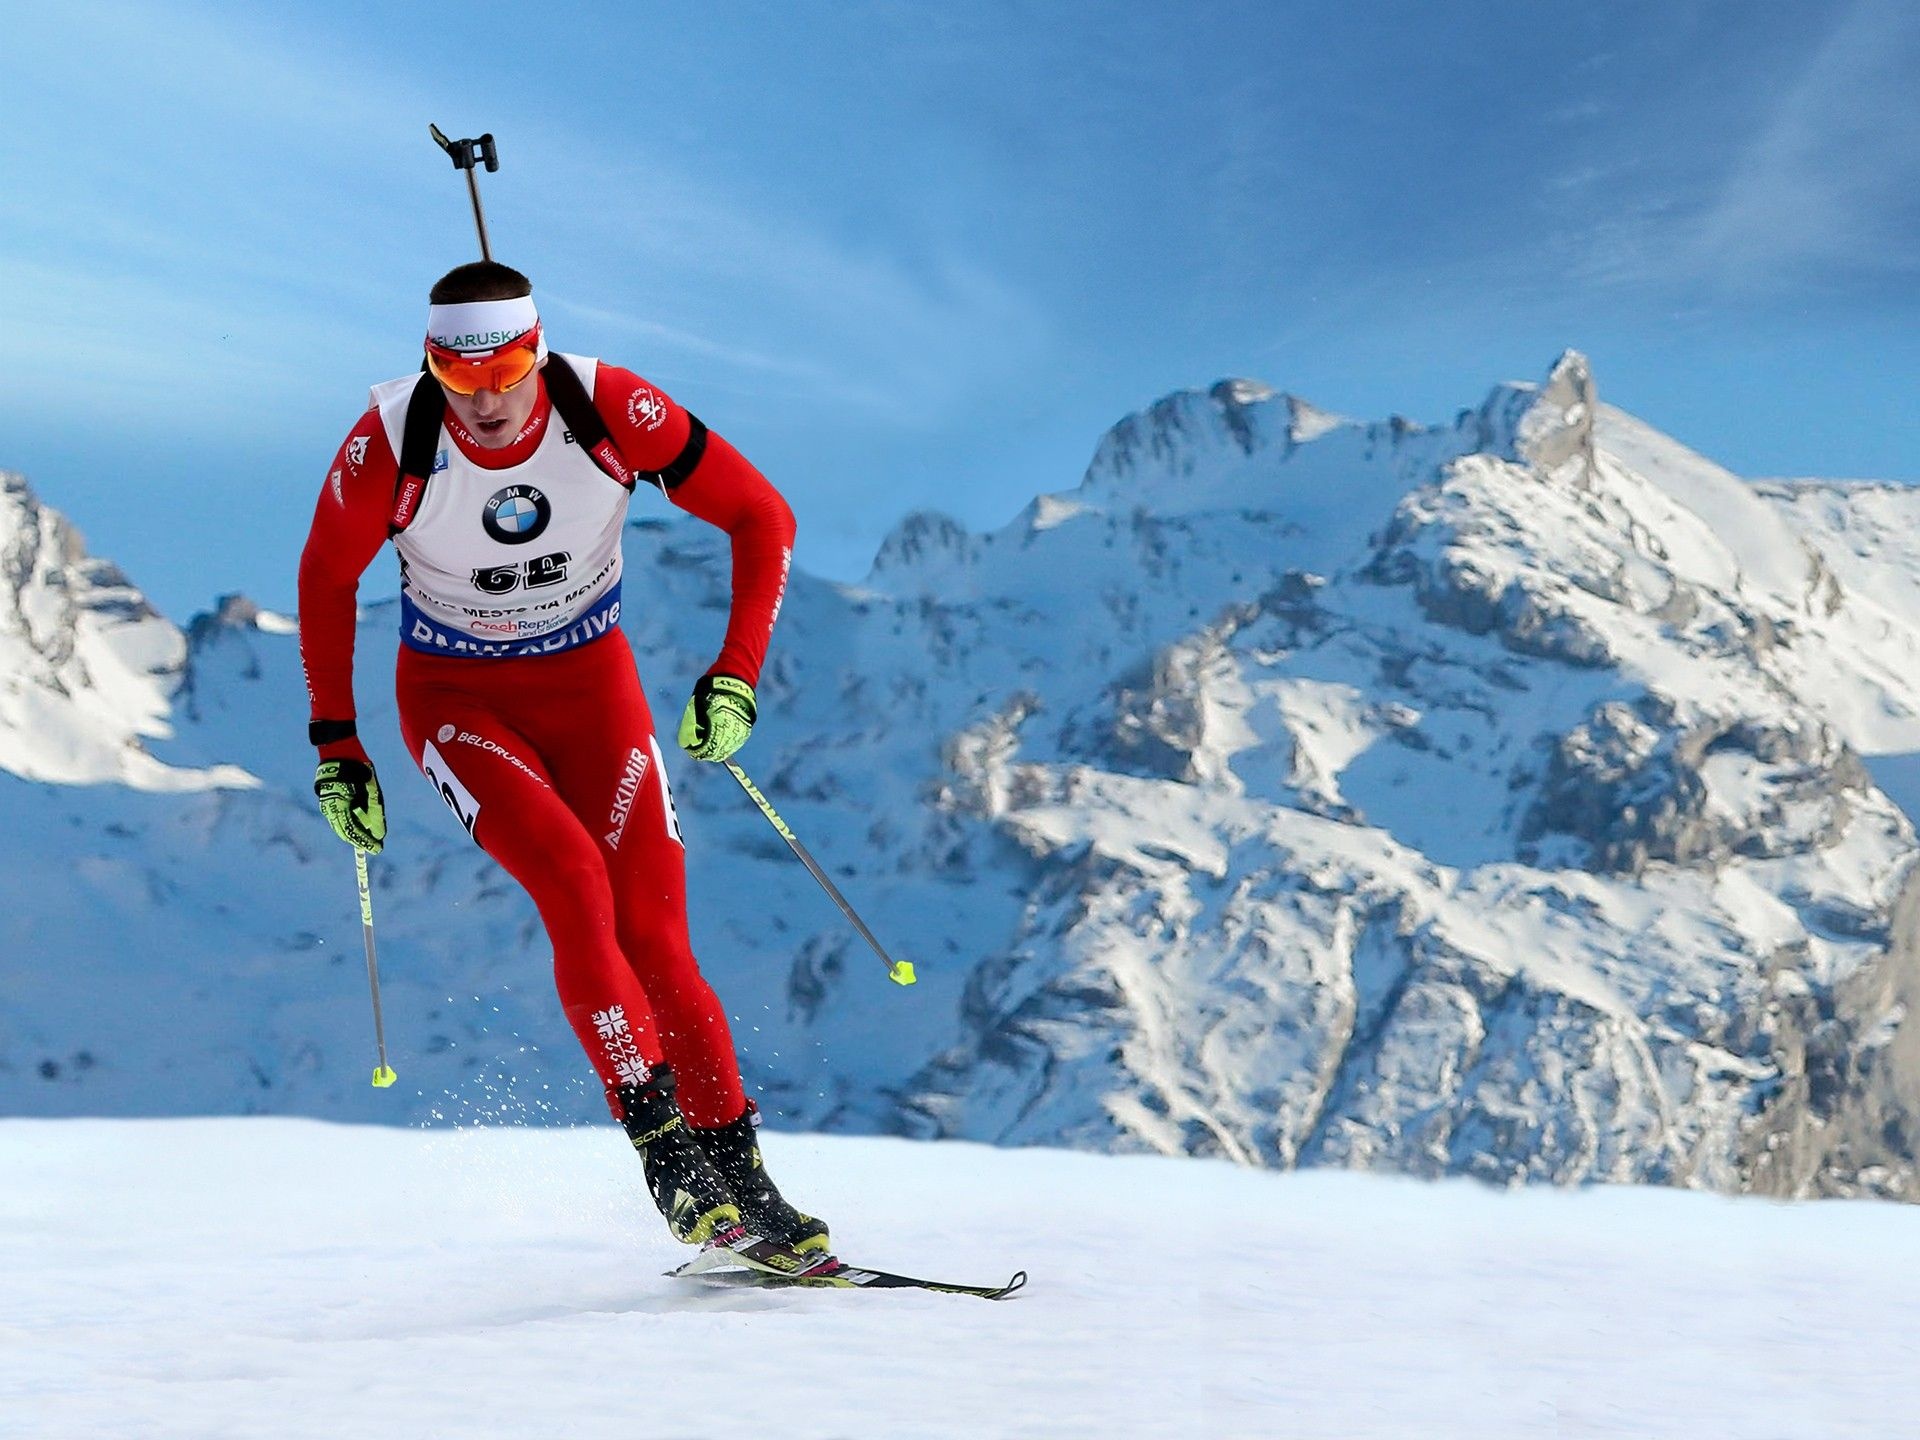 Biathlon: Single mixed relay, Cross-country skiing, Rifle shooting. 1920x1440 HD Background.